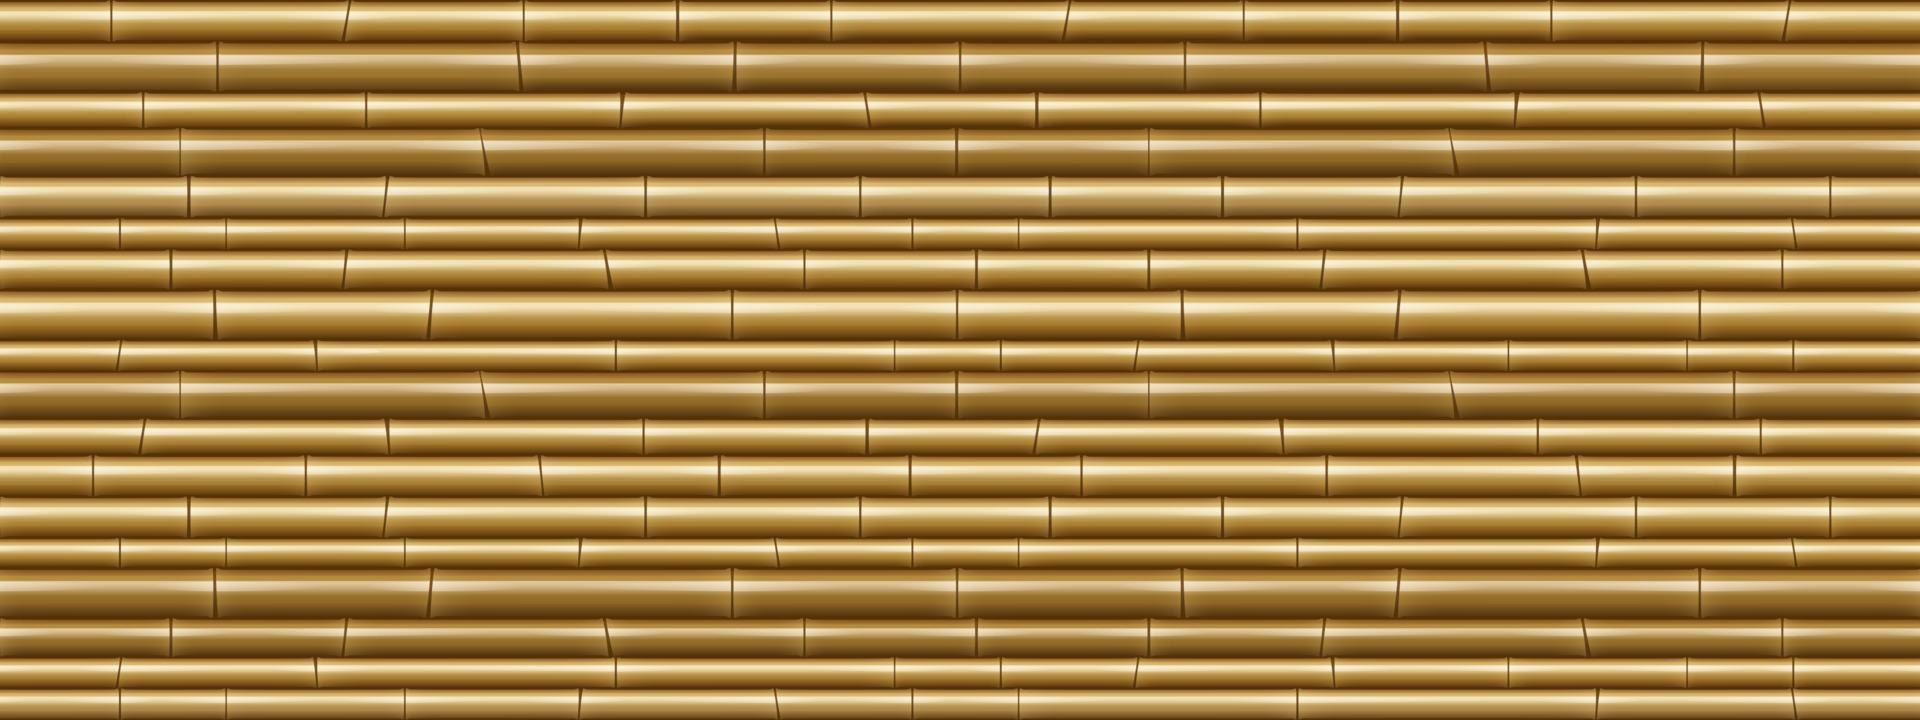 Brown bamboo wall texture seamless pattern vector